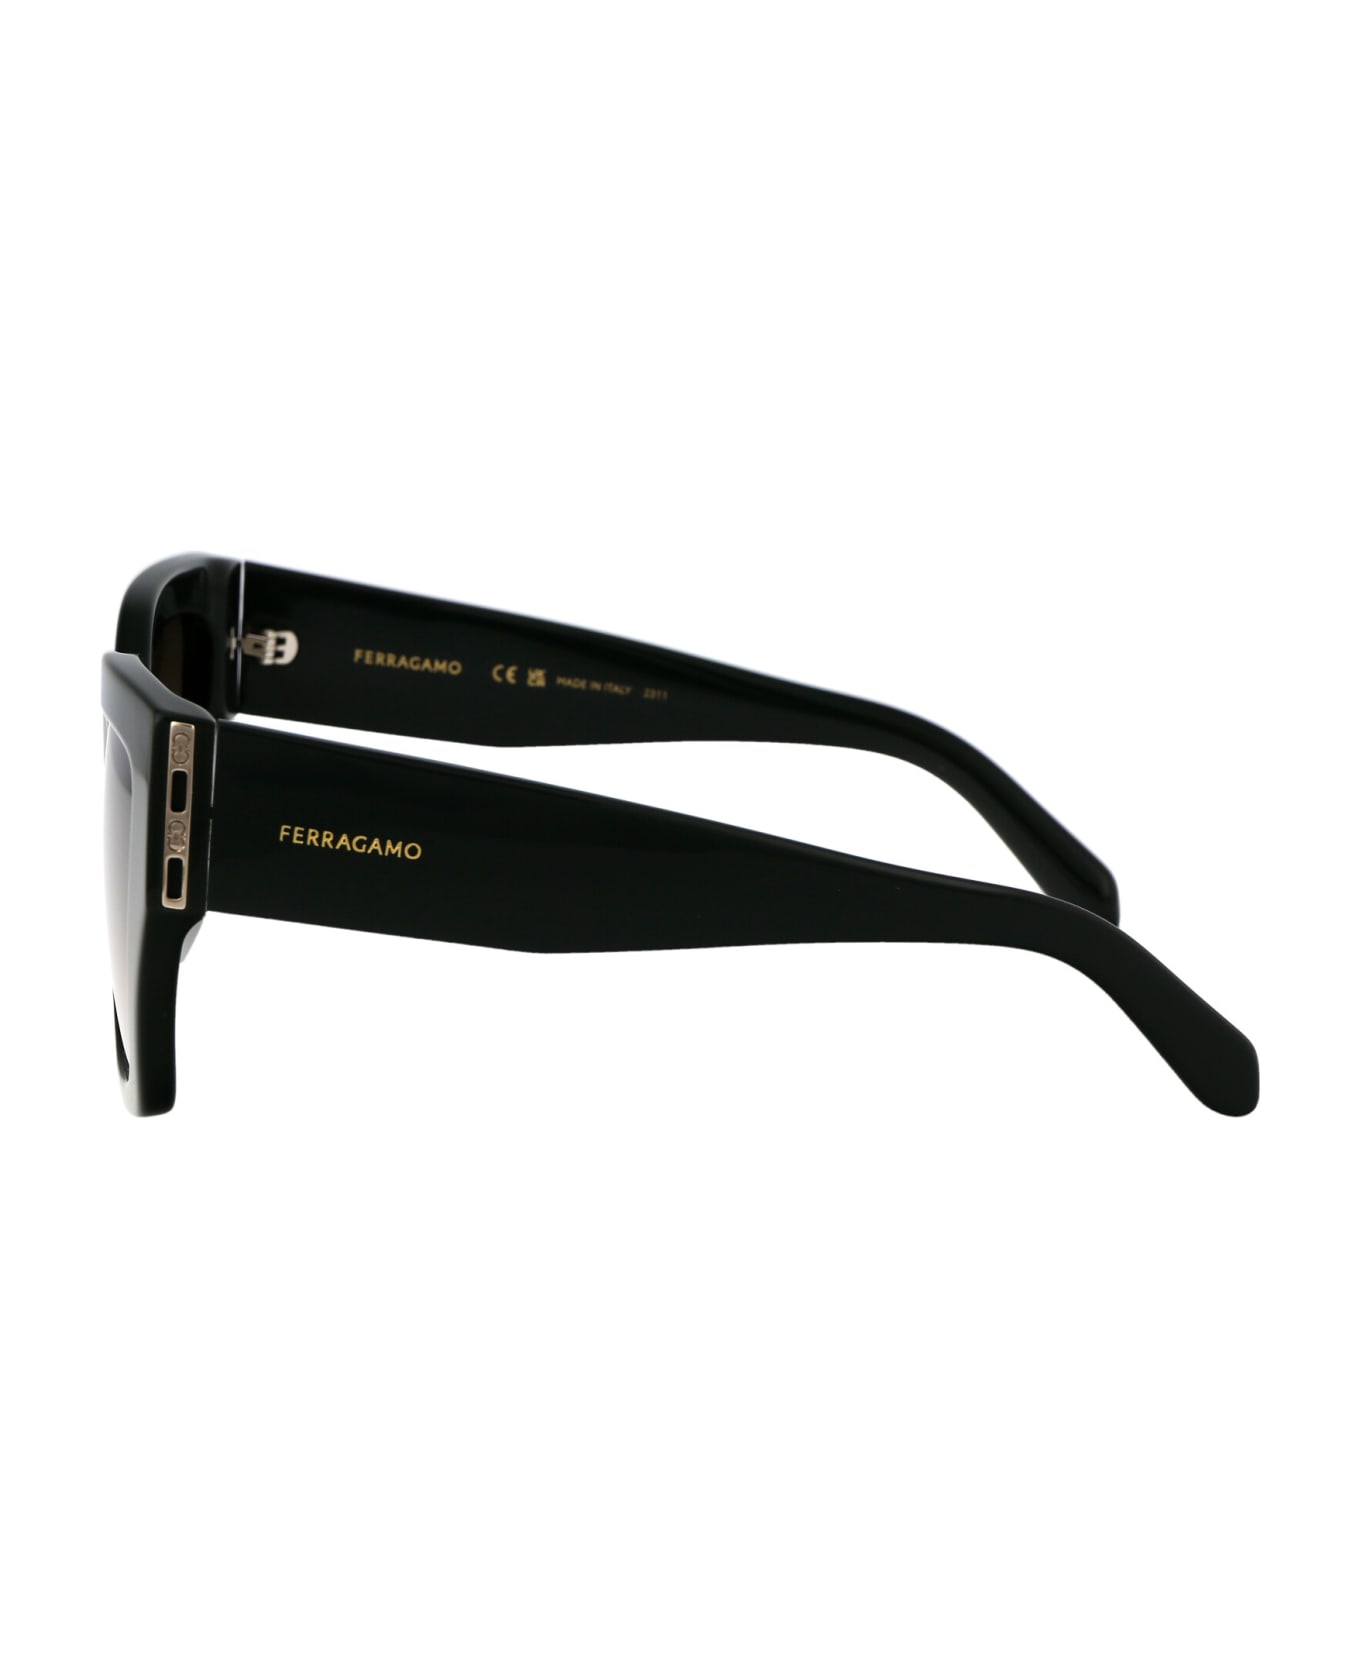 Salvatore Ferragamo Eyewear Sf1104s Sunglasses - 302 GREEN